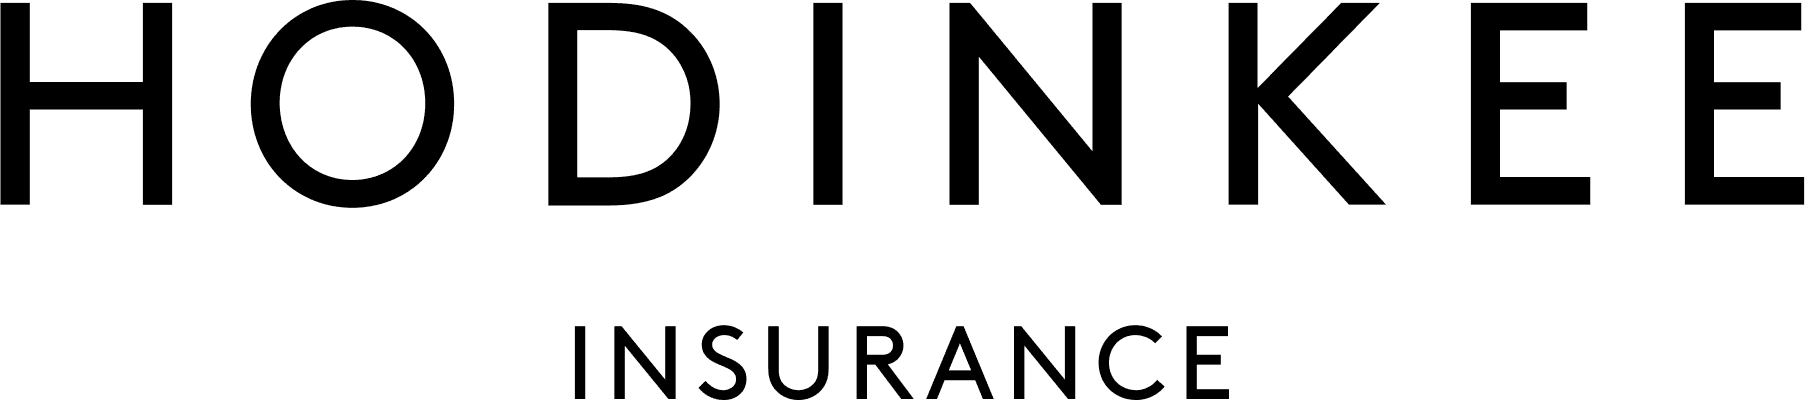 Hodinkee Insurance